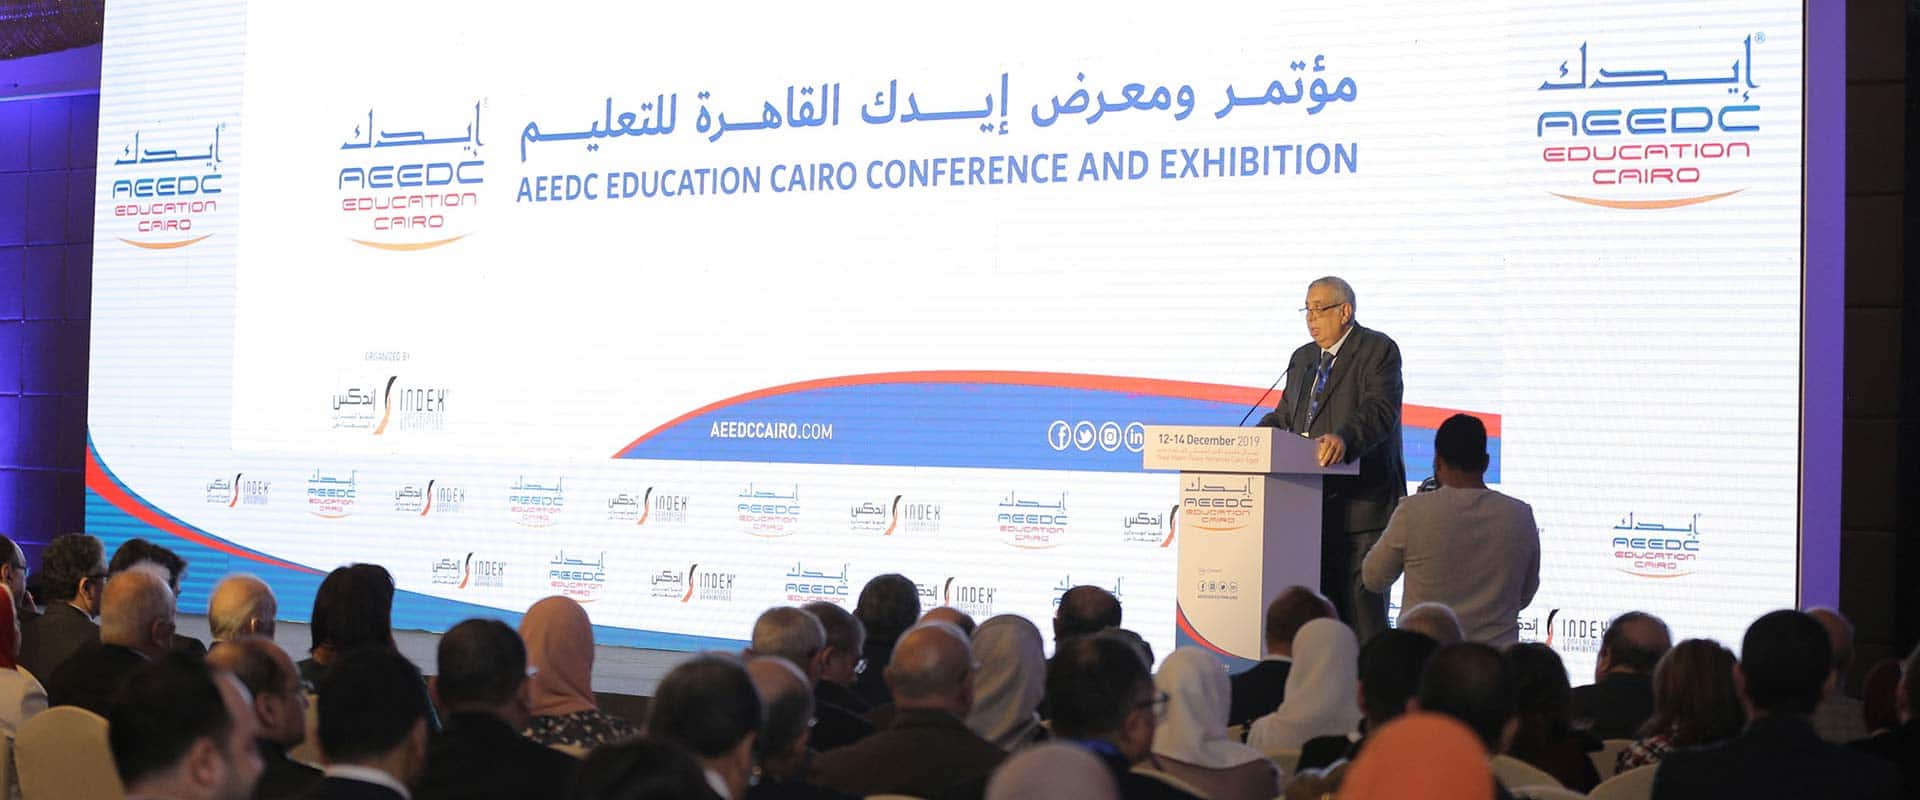 AEEDC Education Cairo: Spreading the AEEDC Word